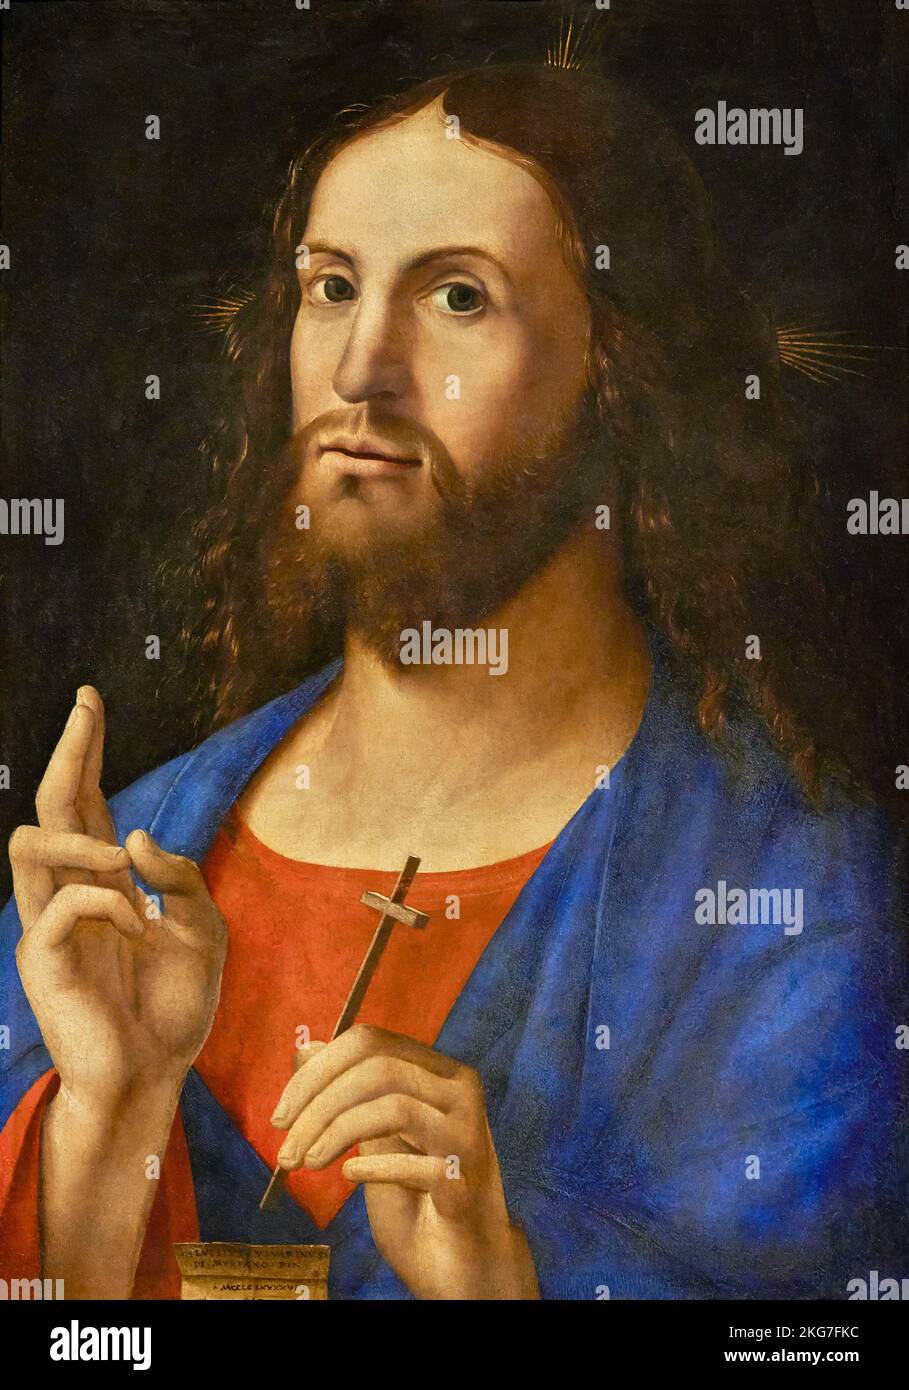 Cristo benedicente - olio su tavola - Alvise Vivarini   - 1498 - Milano, Pinacoteca di Brera Stock Photo